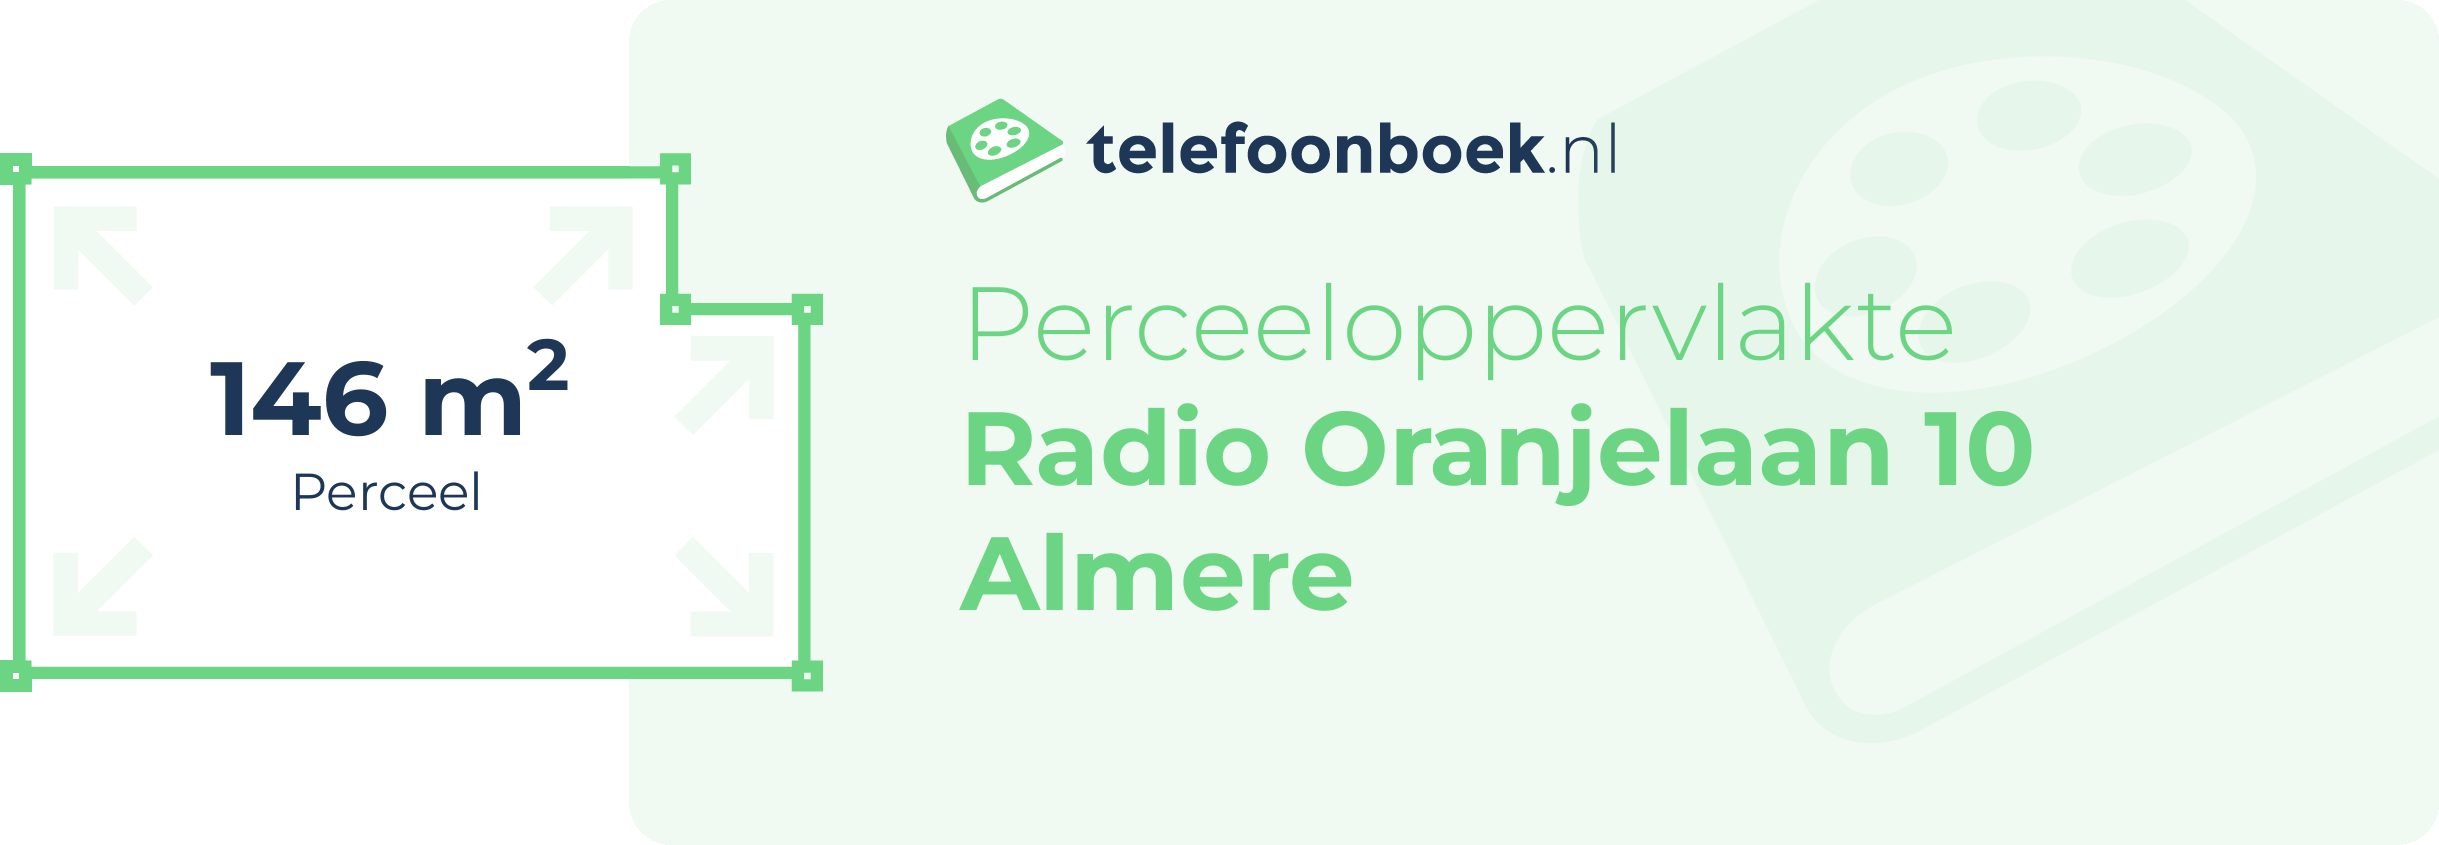 Perceeloppervlakte Radio Oranjelaan 10 Almere